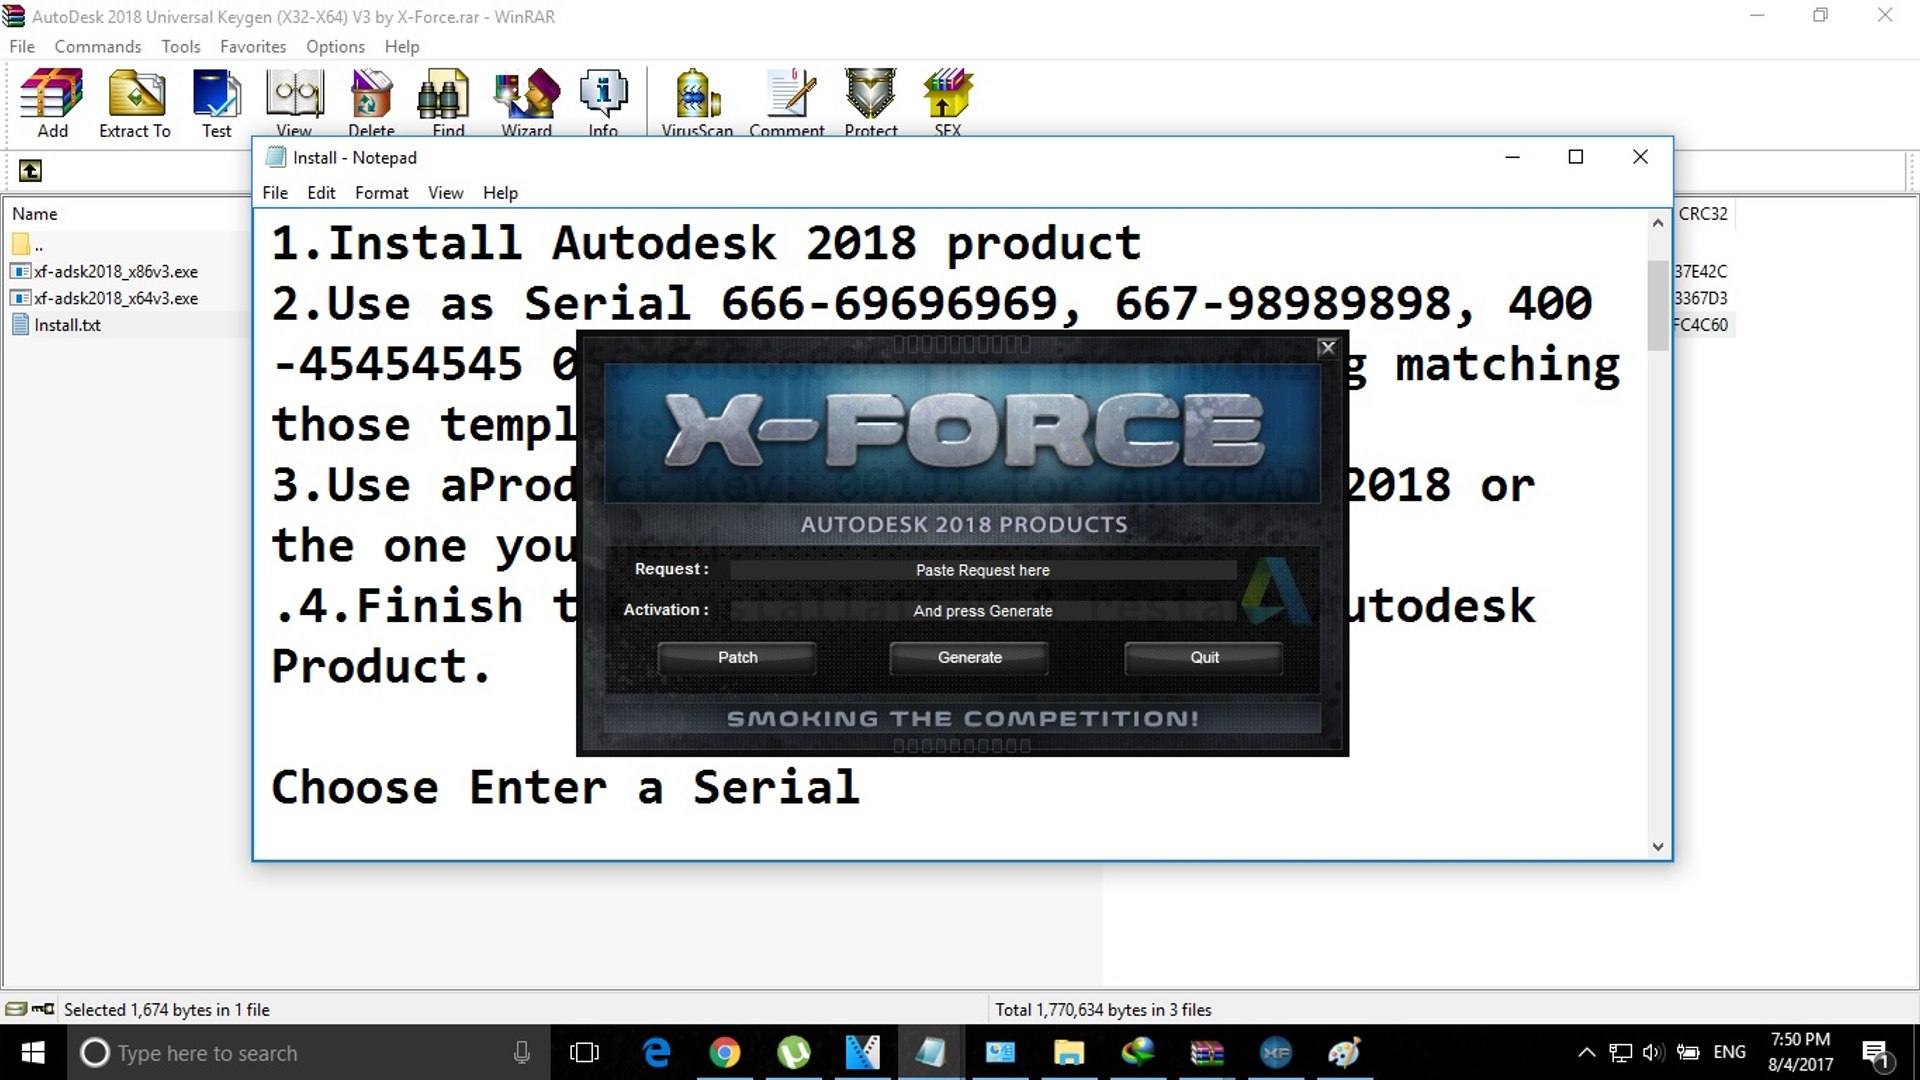 xforce keygen AutoCAD MEP 2018 64 bit free .exe